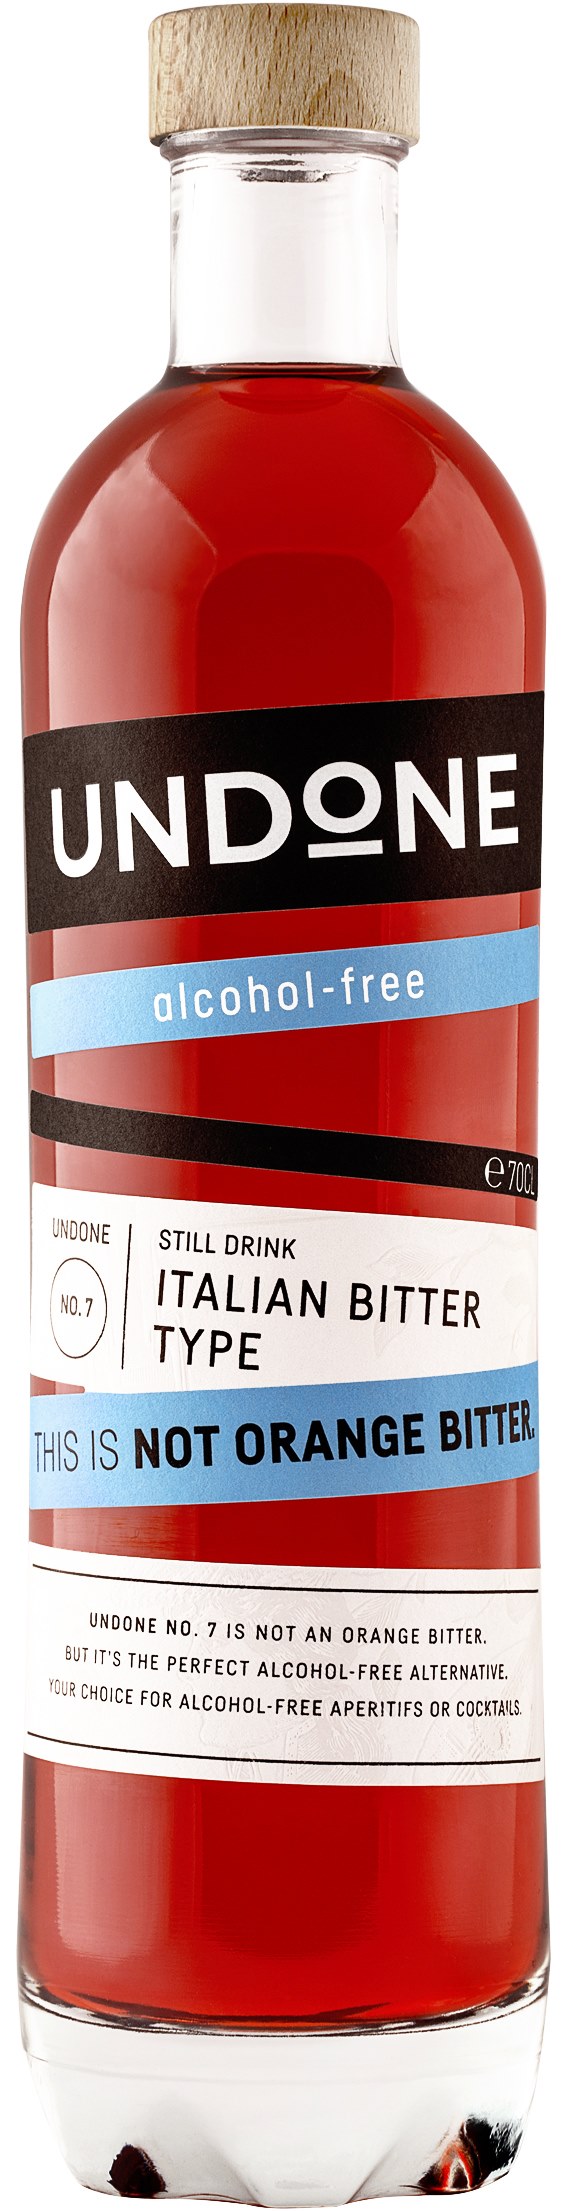 Undone No 7 Italian Bitter Type - THIS IS NOT ORANGE BITTER_Freisteller